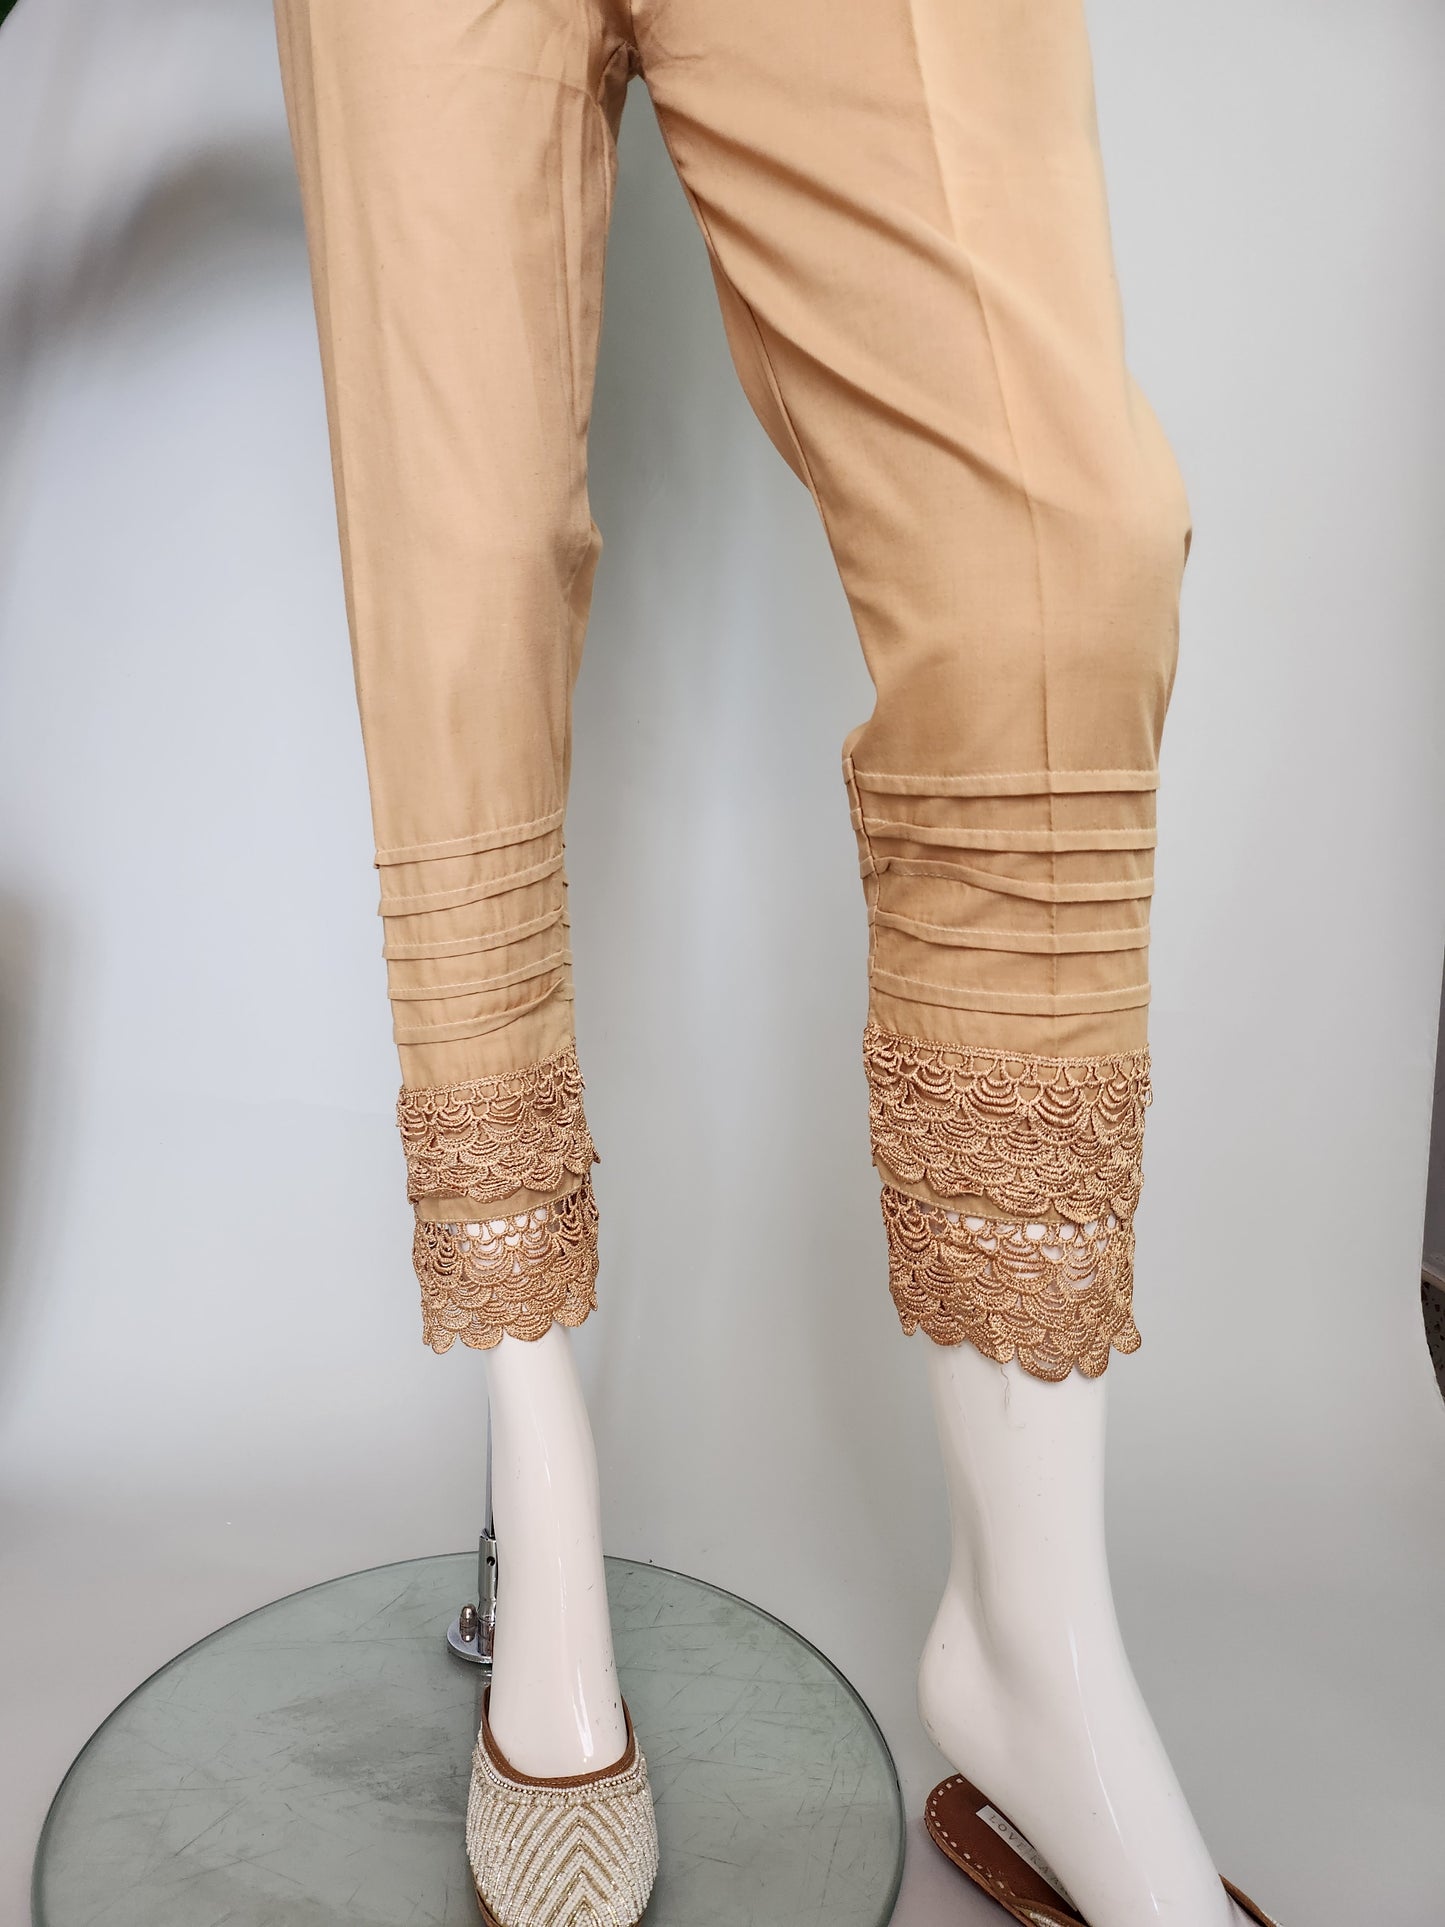 SABEEN MANEKIA - Beige Cotton with Lace Pant